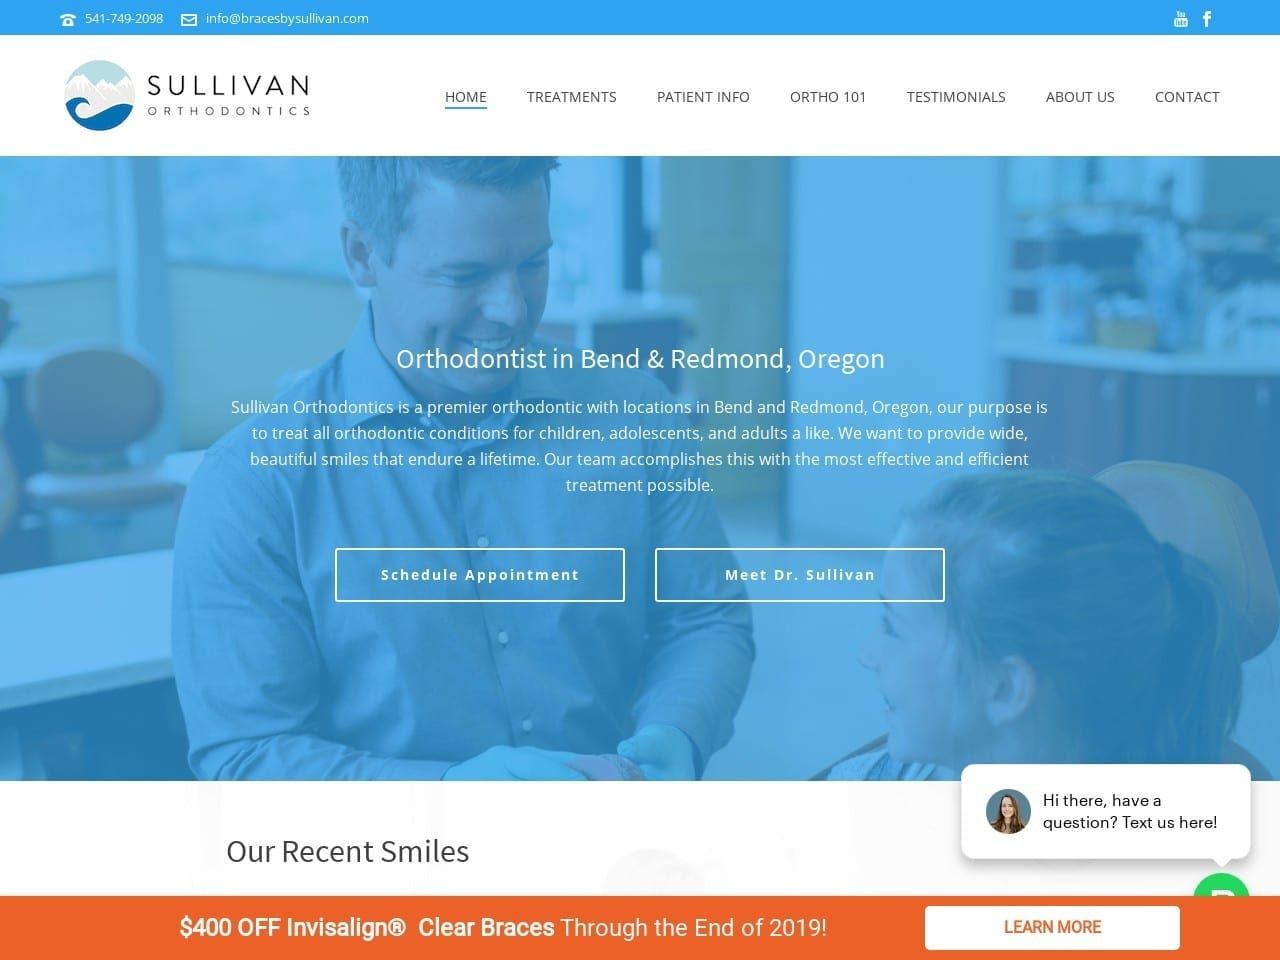 Sullivan Orthodontics Website Screenshot from bracesbysullivan.com